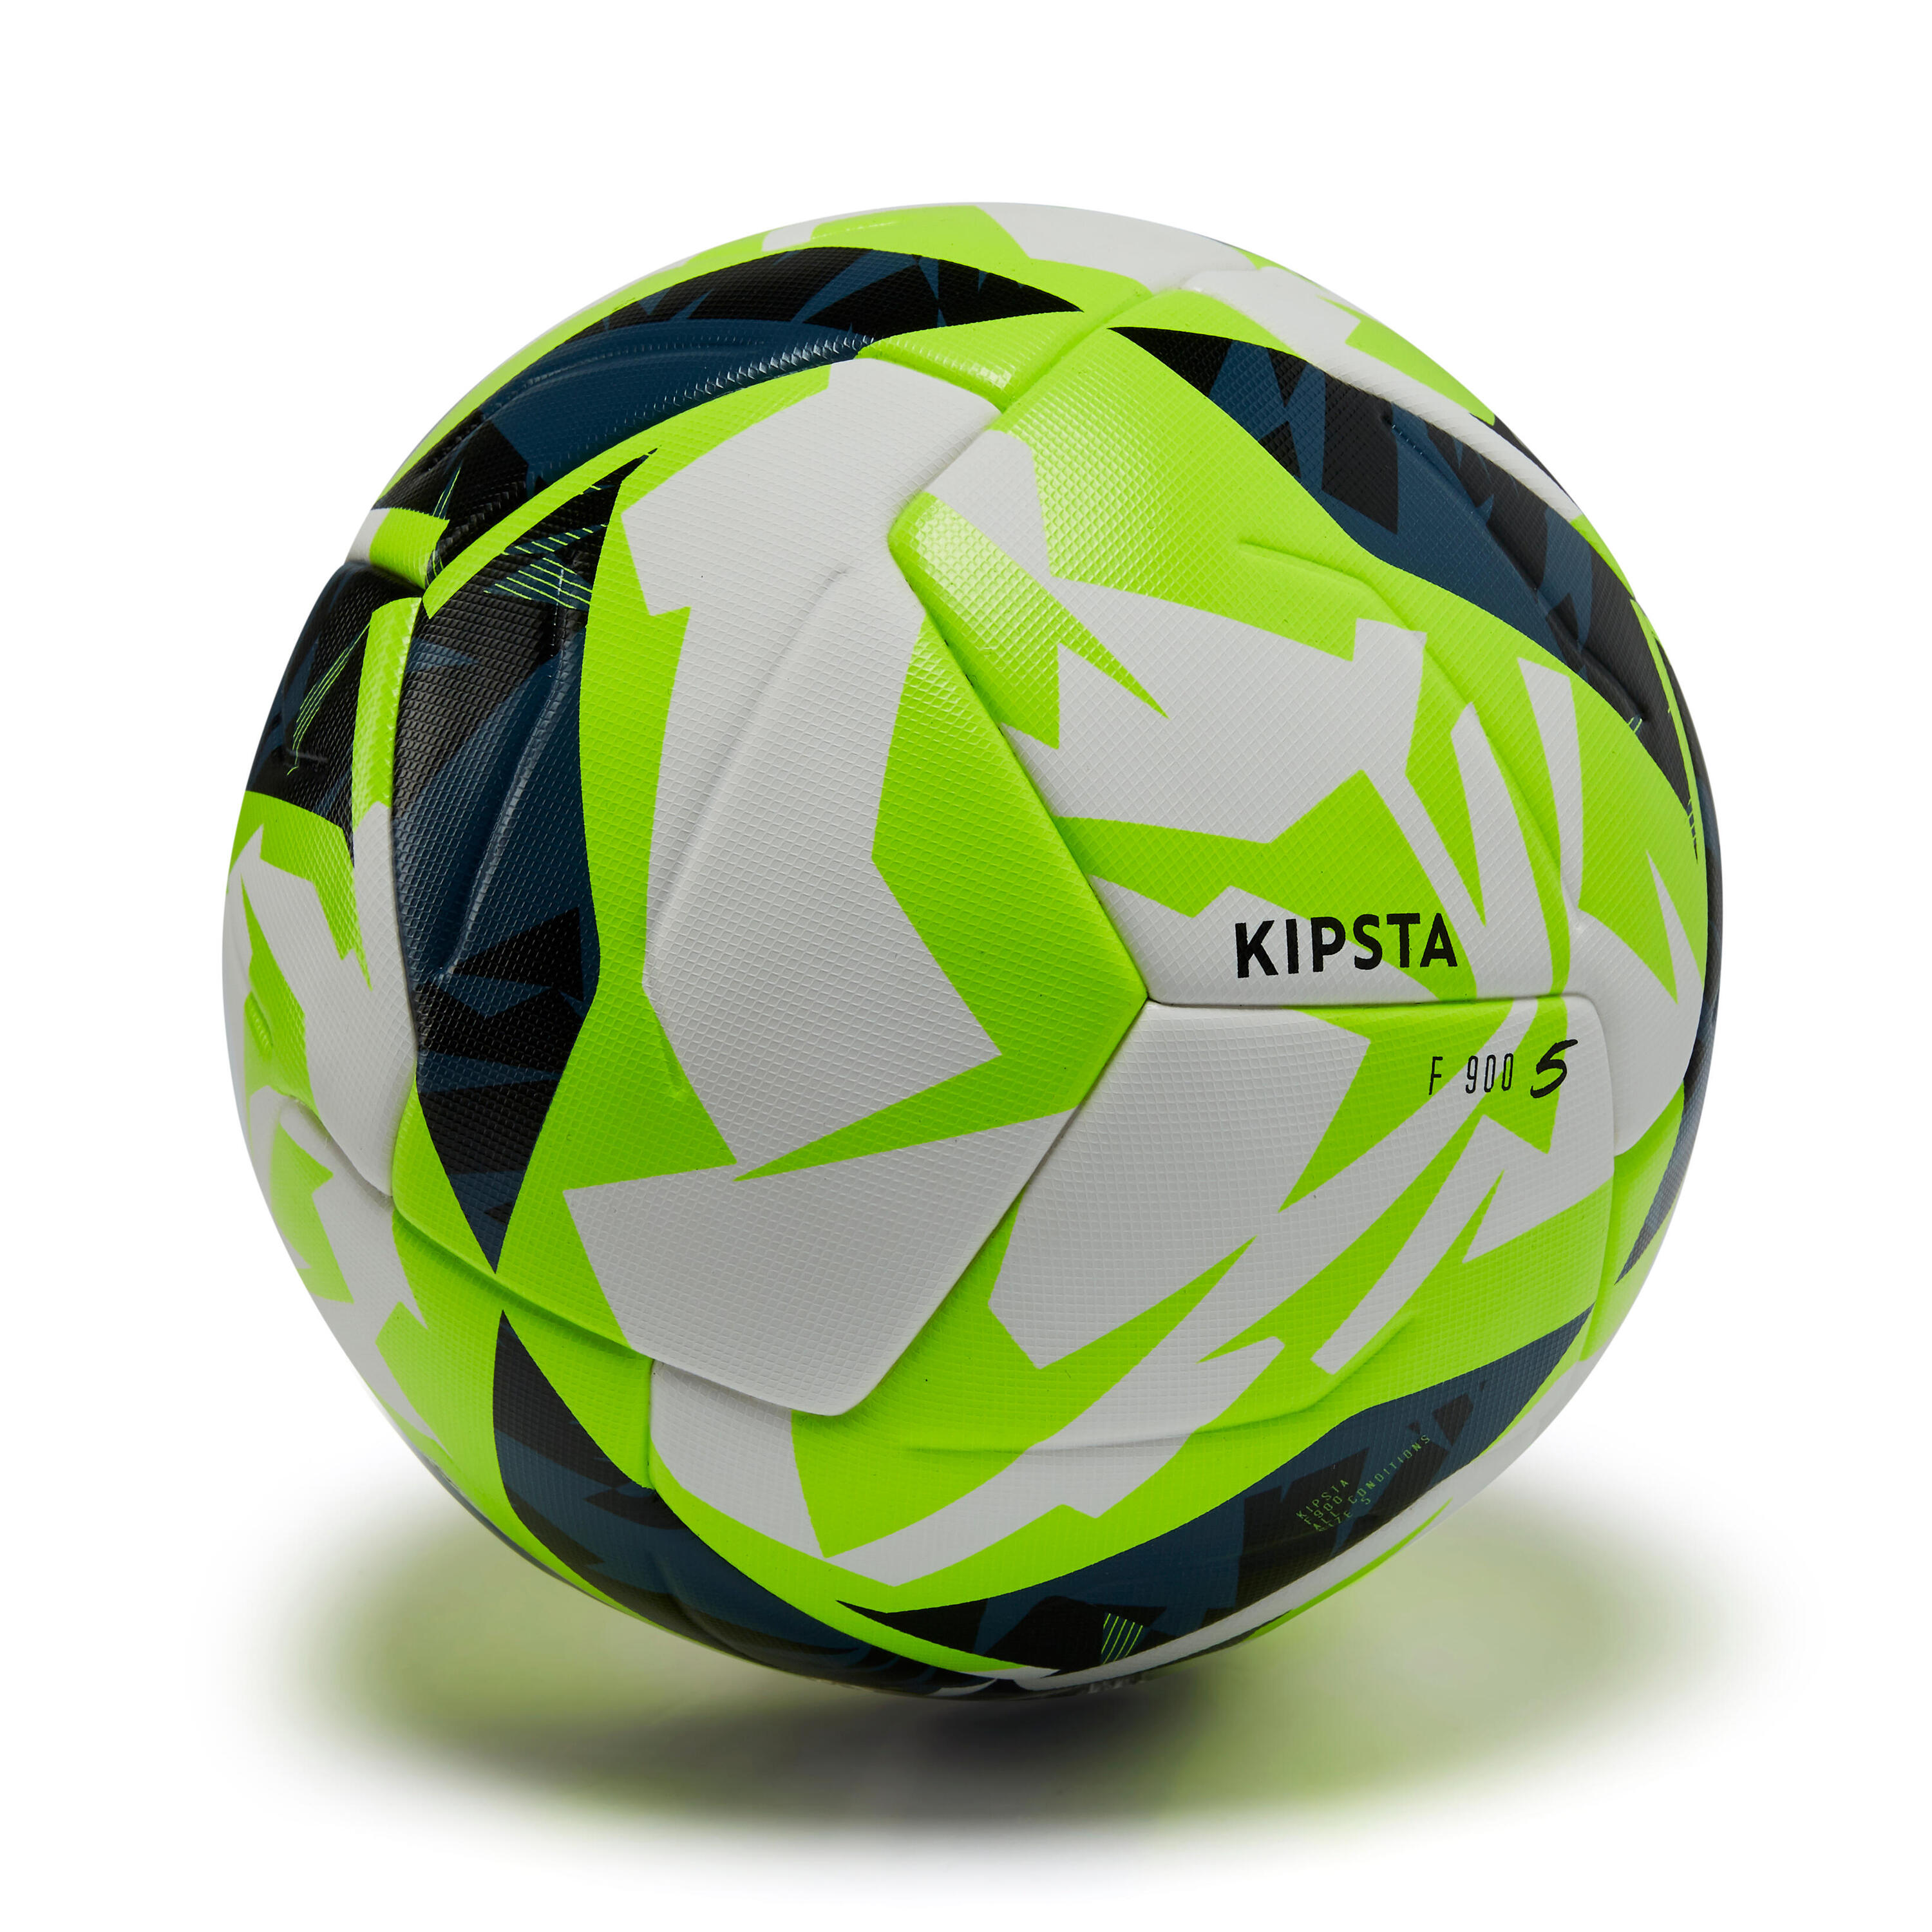 KIPSTA f900 мяч FIFA quality Pro белый размер 5 x Декатлон футбольный. Мяч футбольный FIFA quality Pro 1000982. Мяч футбольный Декатлон. FIFA quality Pro 1006129.